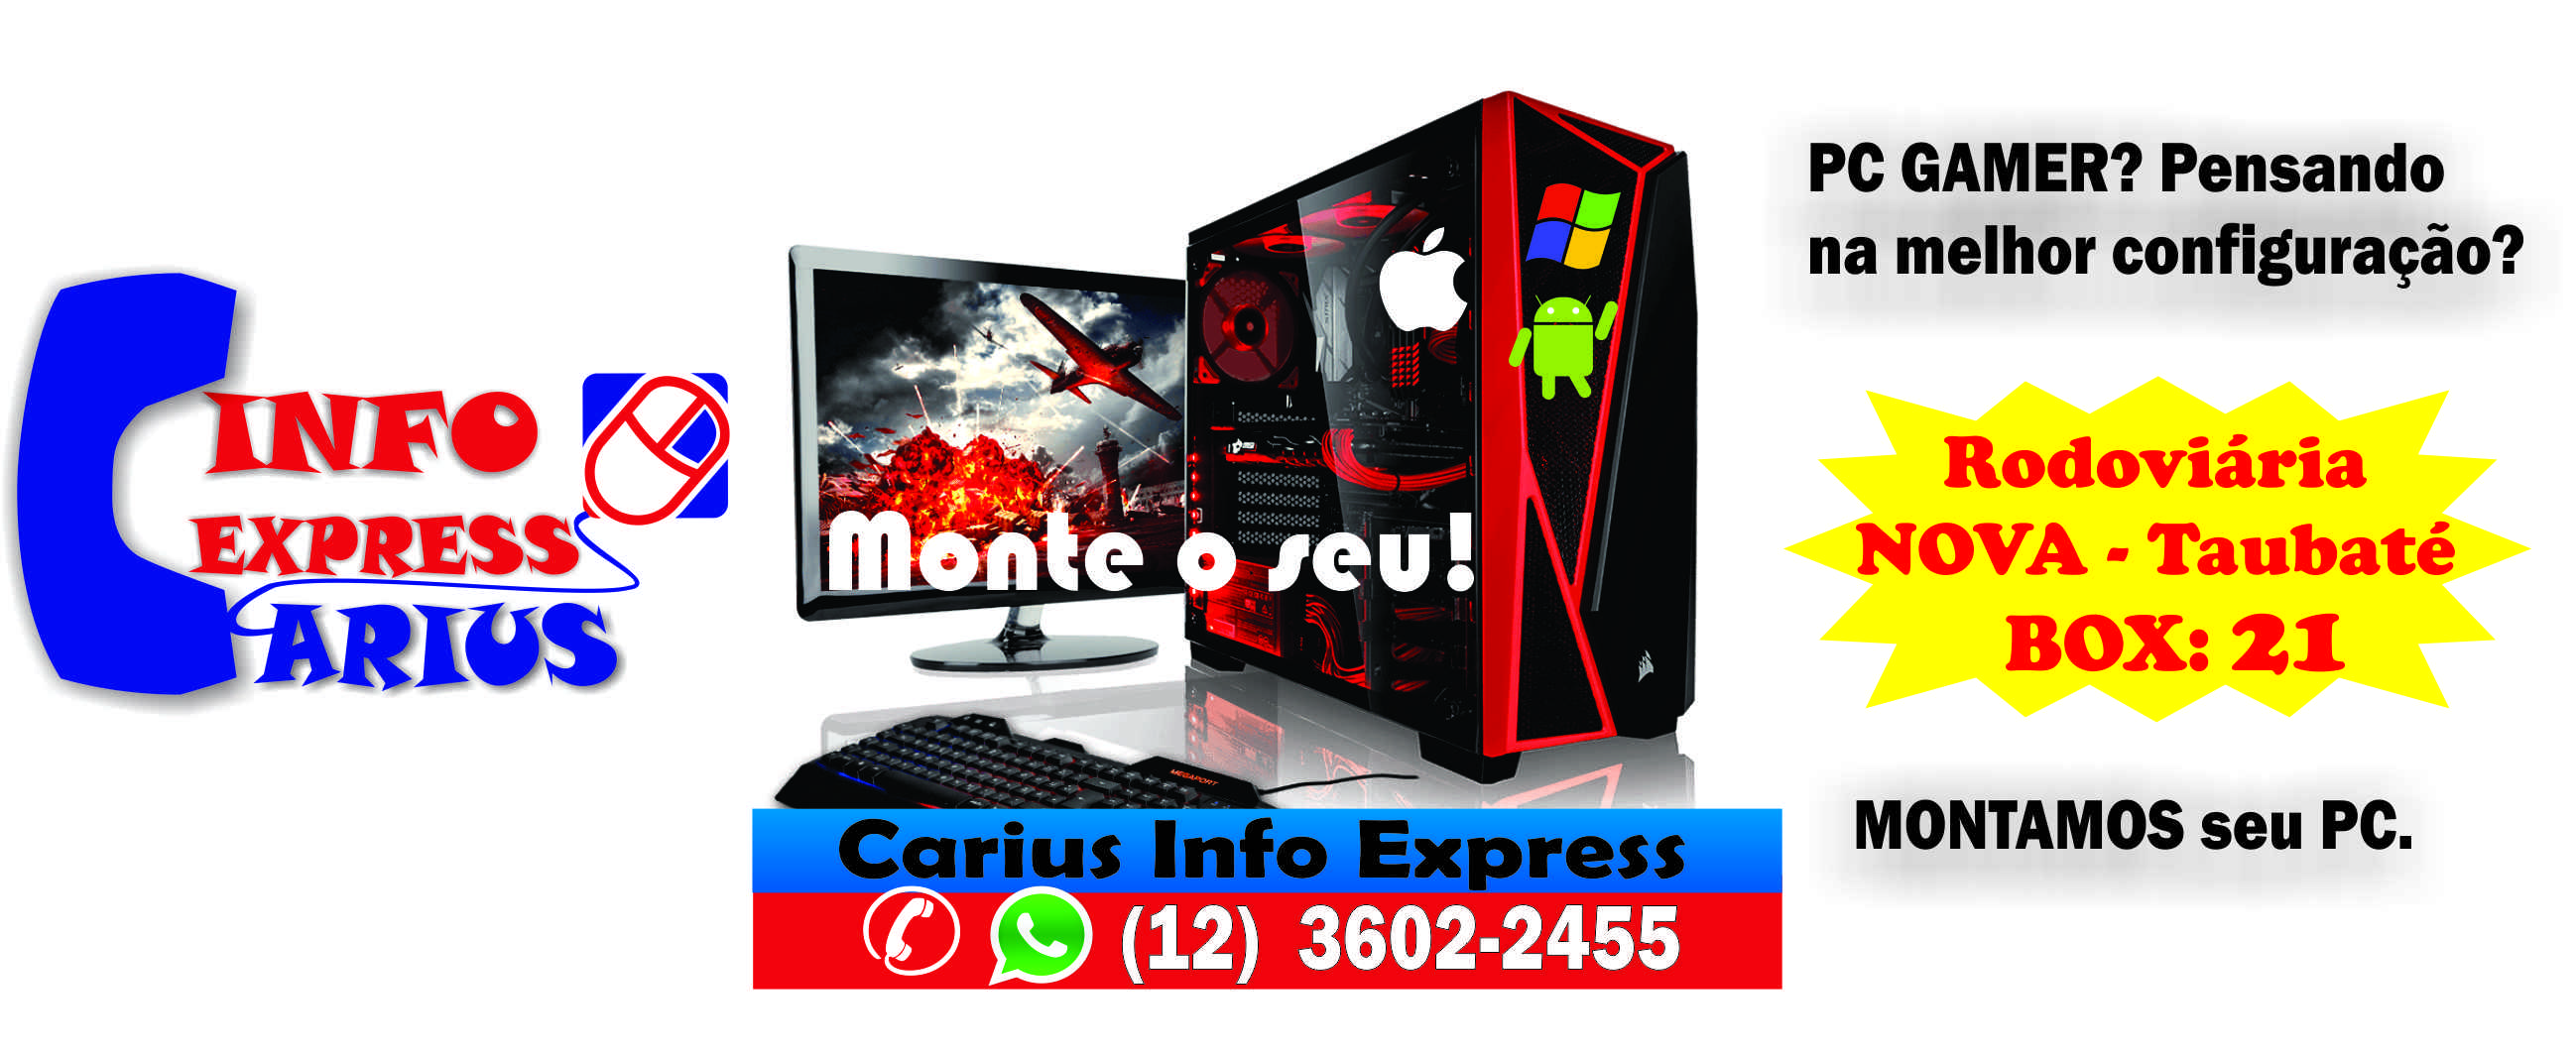 carius info express